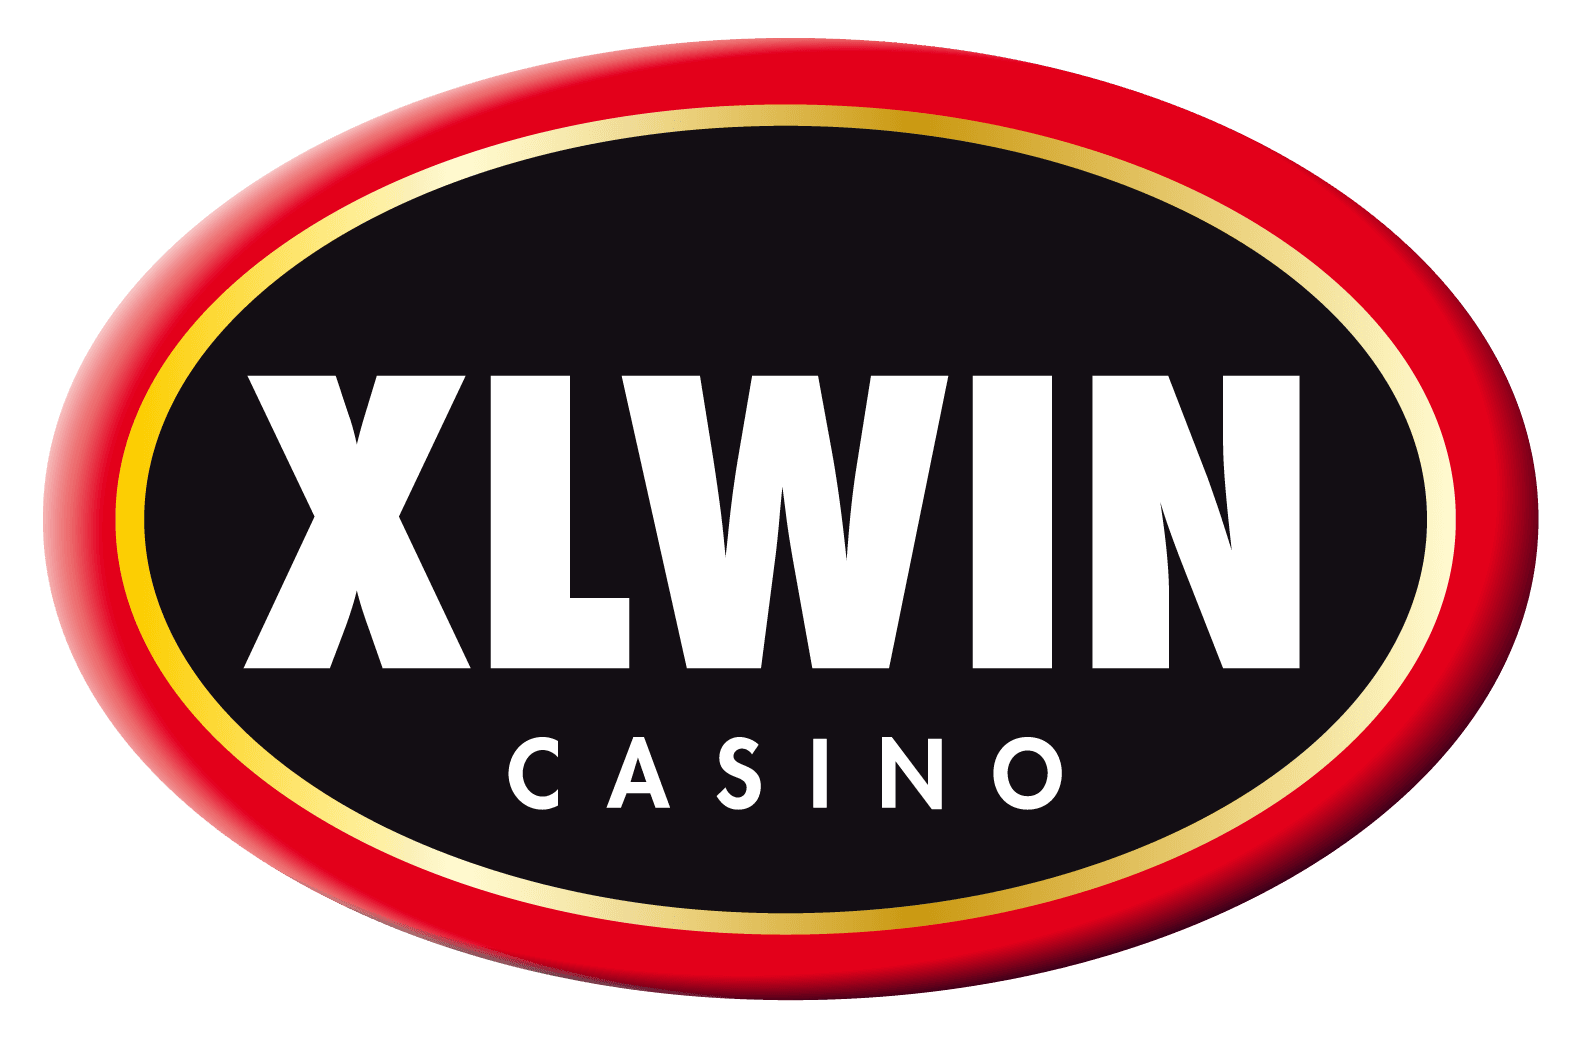 XLWIN Casino Berkel-Enschot geopend